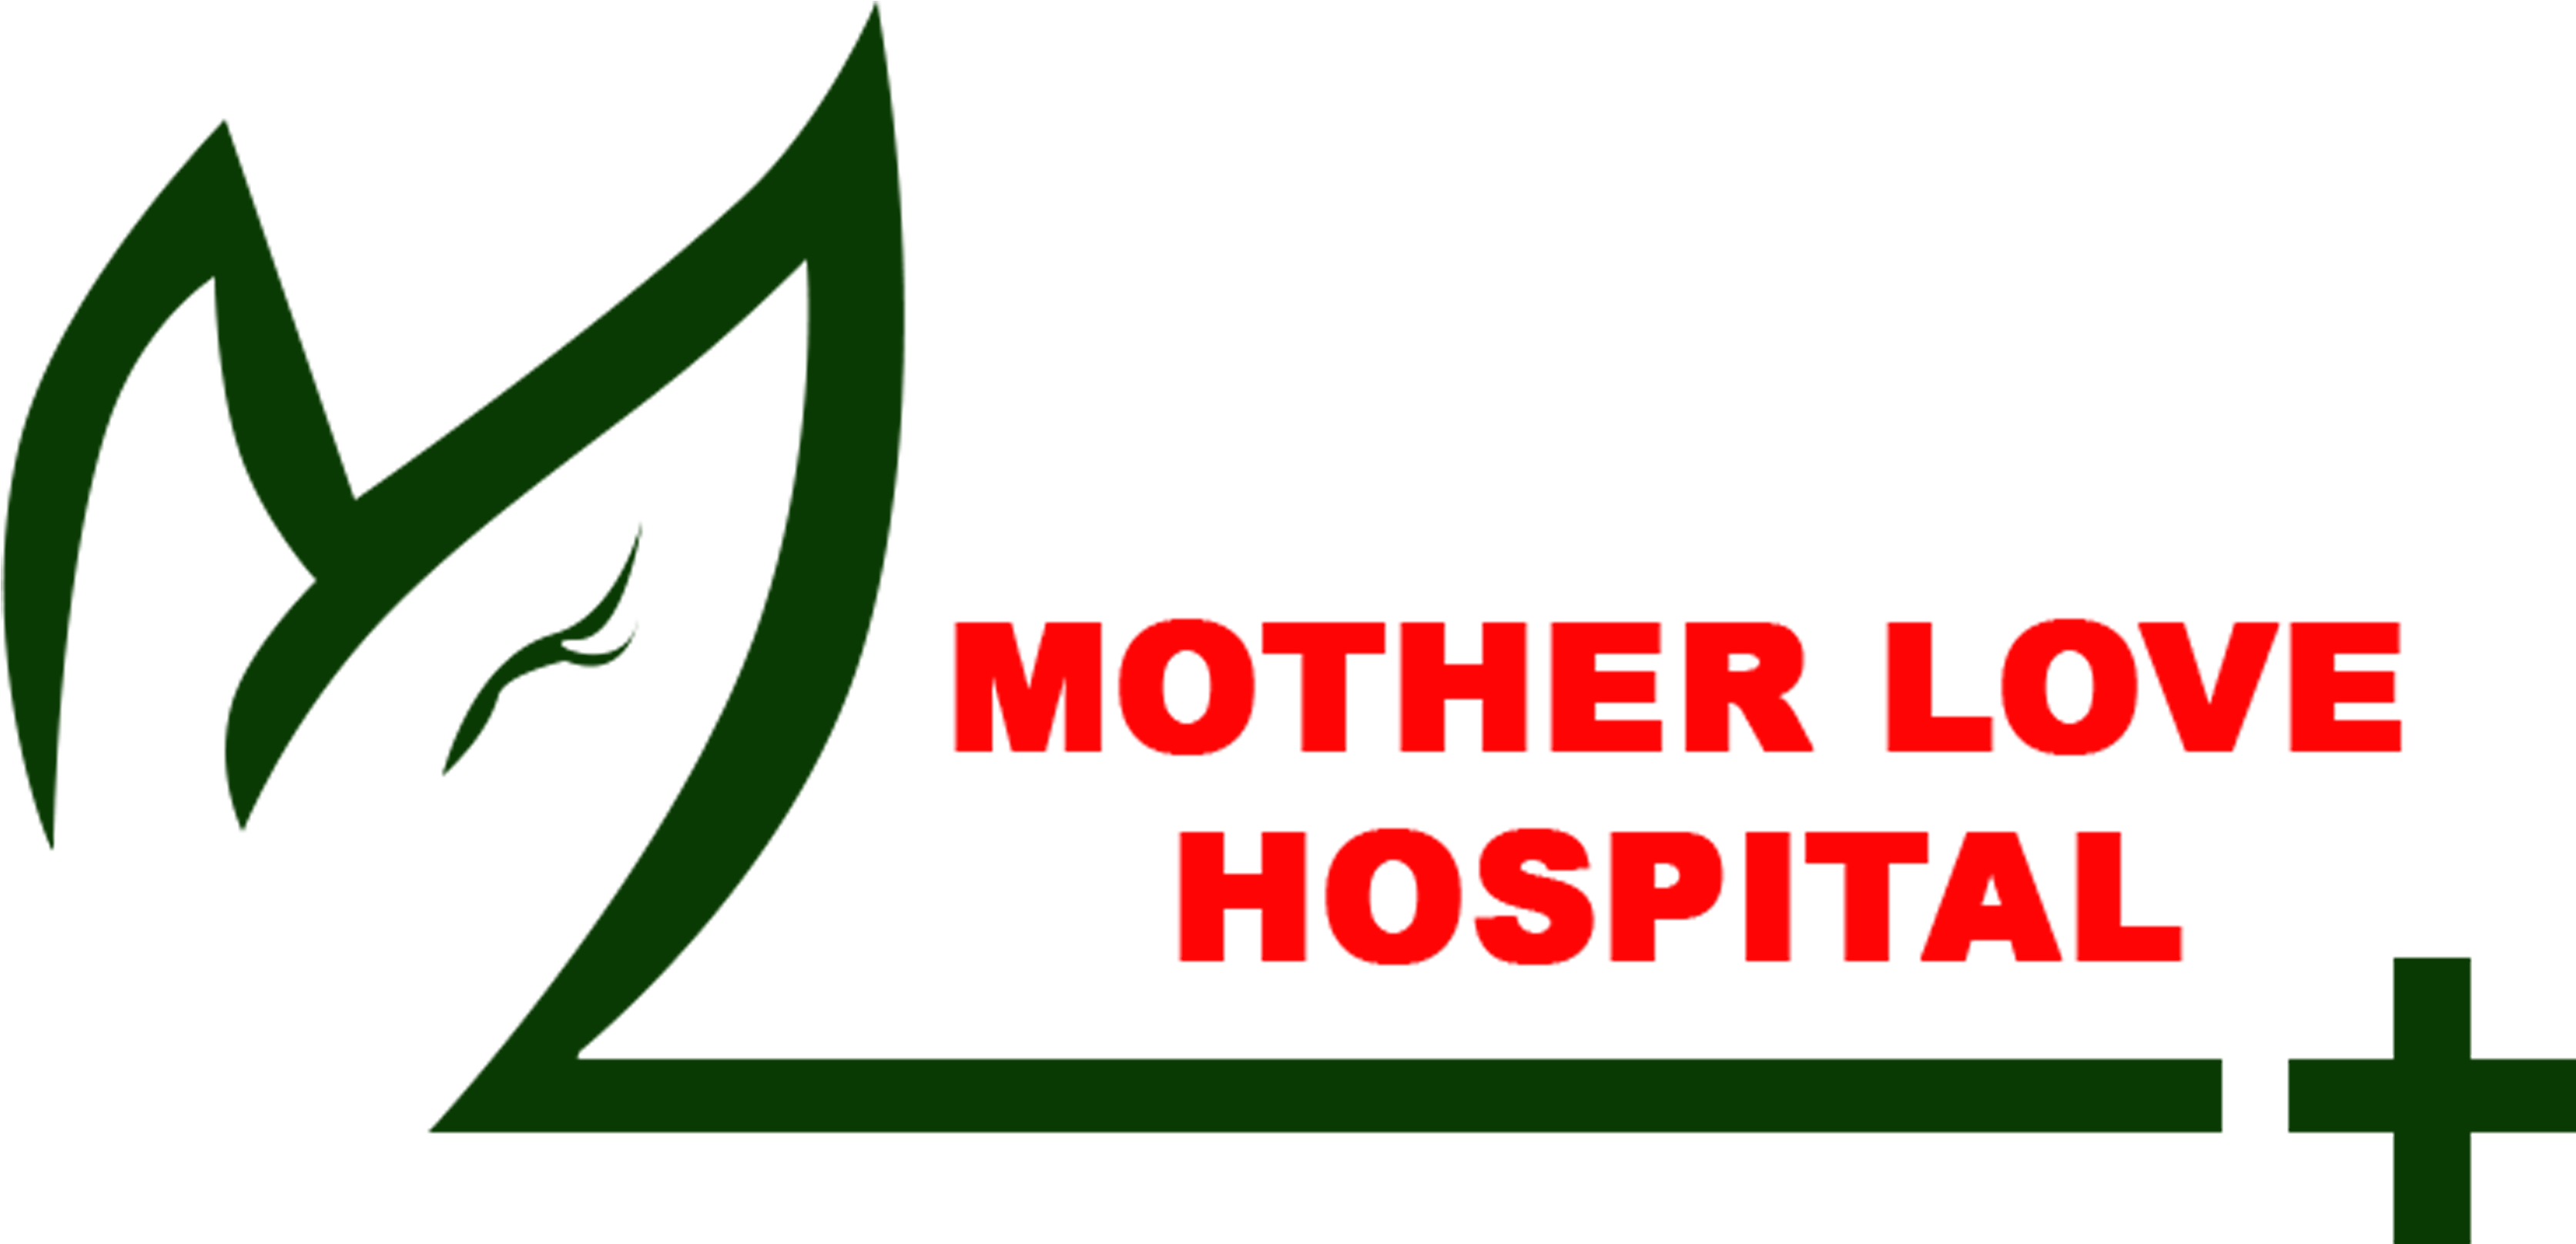 Elisha Hospital Logo PNG Transparent & SVG Vector - Freebie Supply